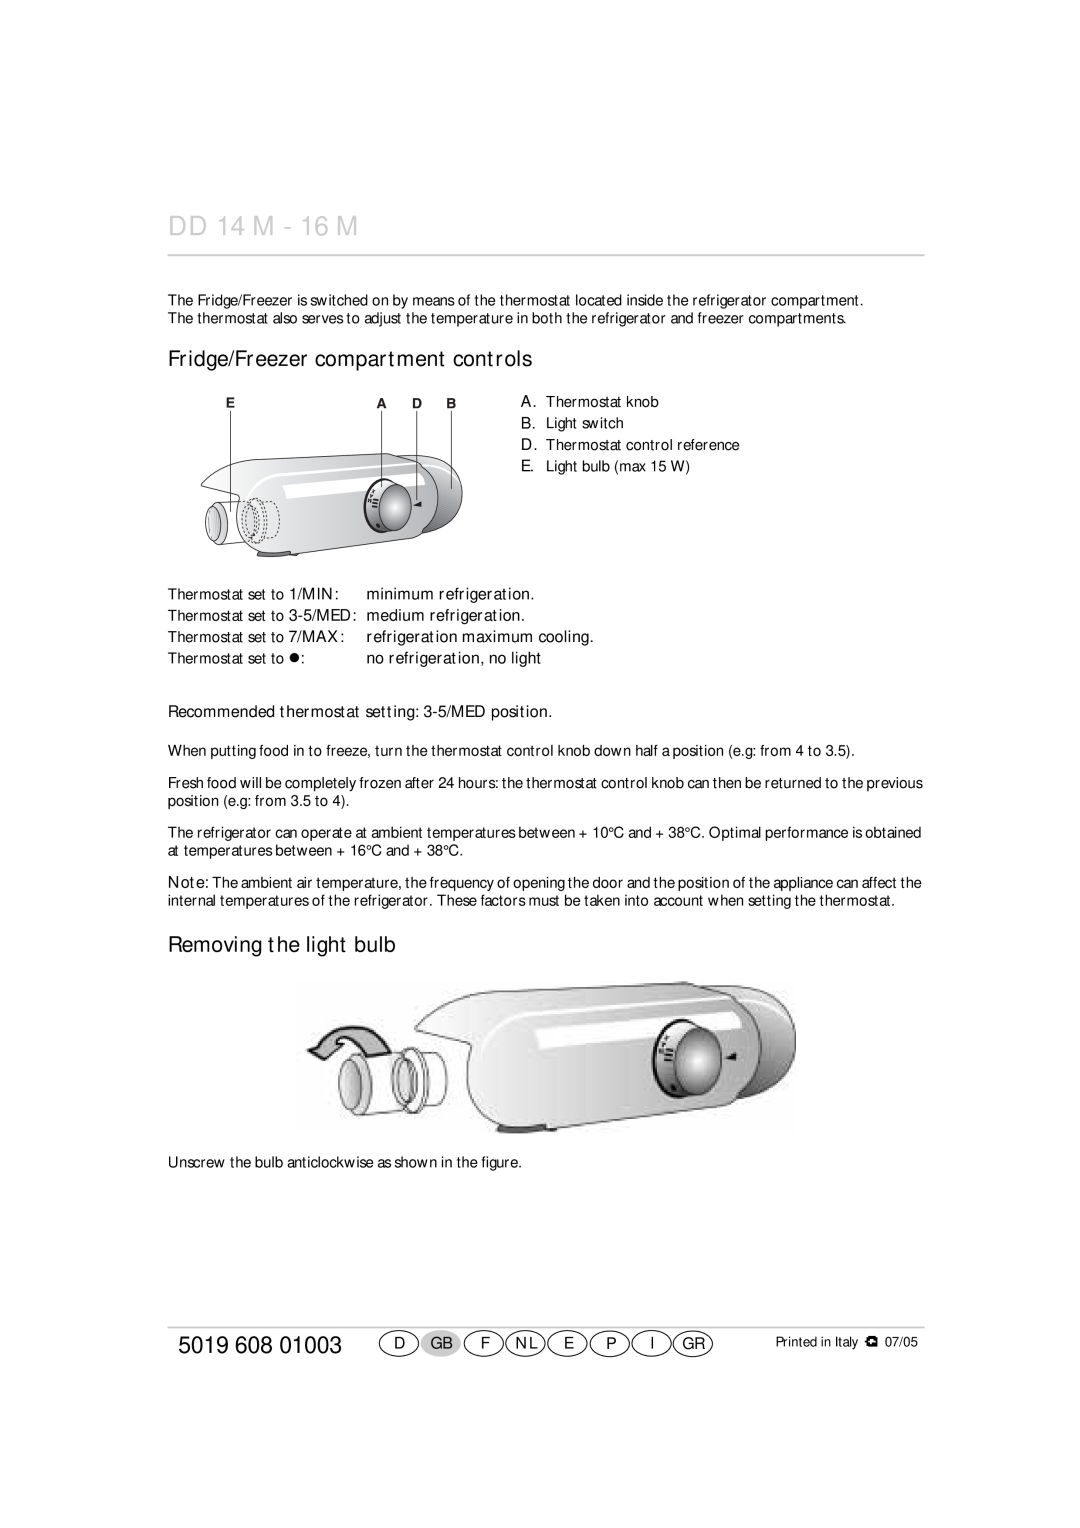 Smeg FR238APL manual Fridge/Freezer compartment controls, Removing the light bulb, DD 14 M - 16 M, 5019 